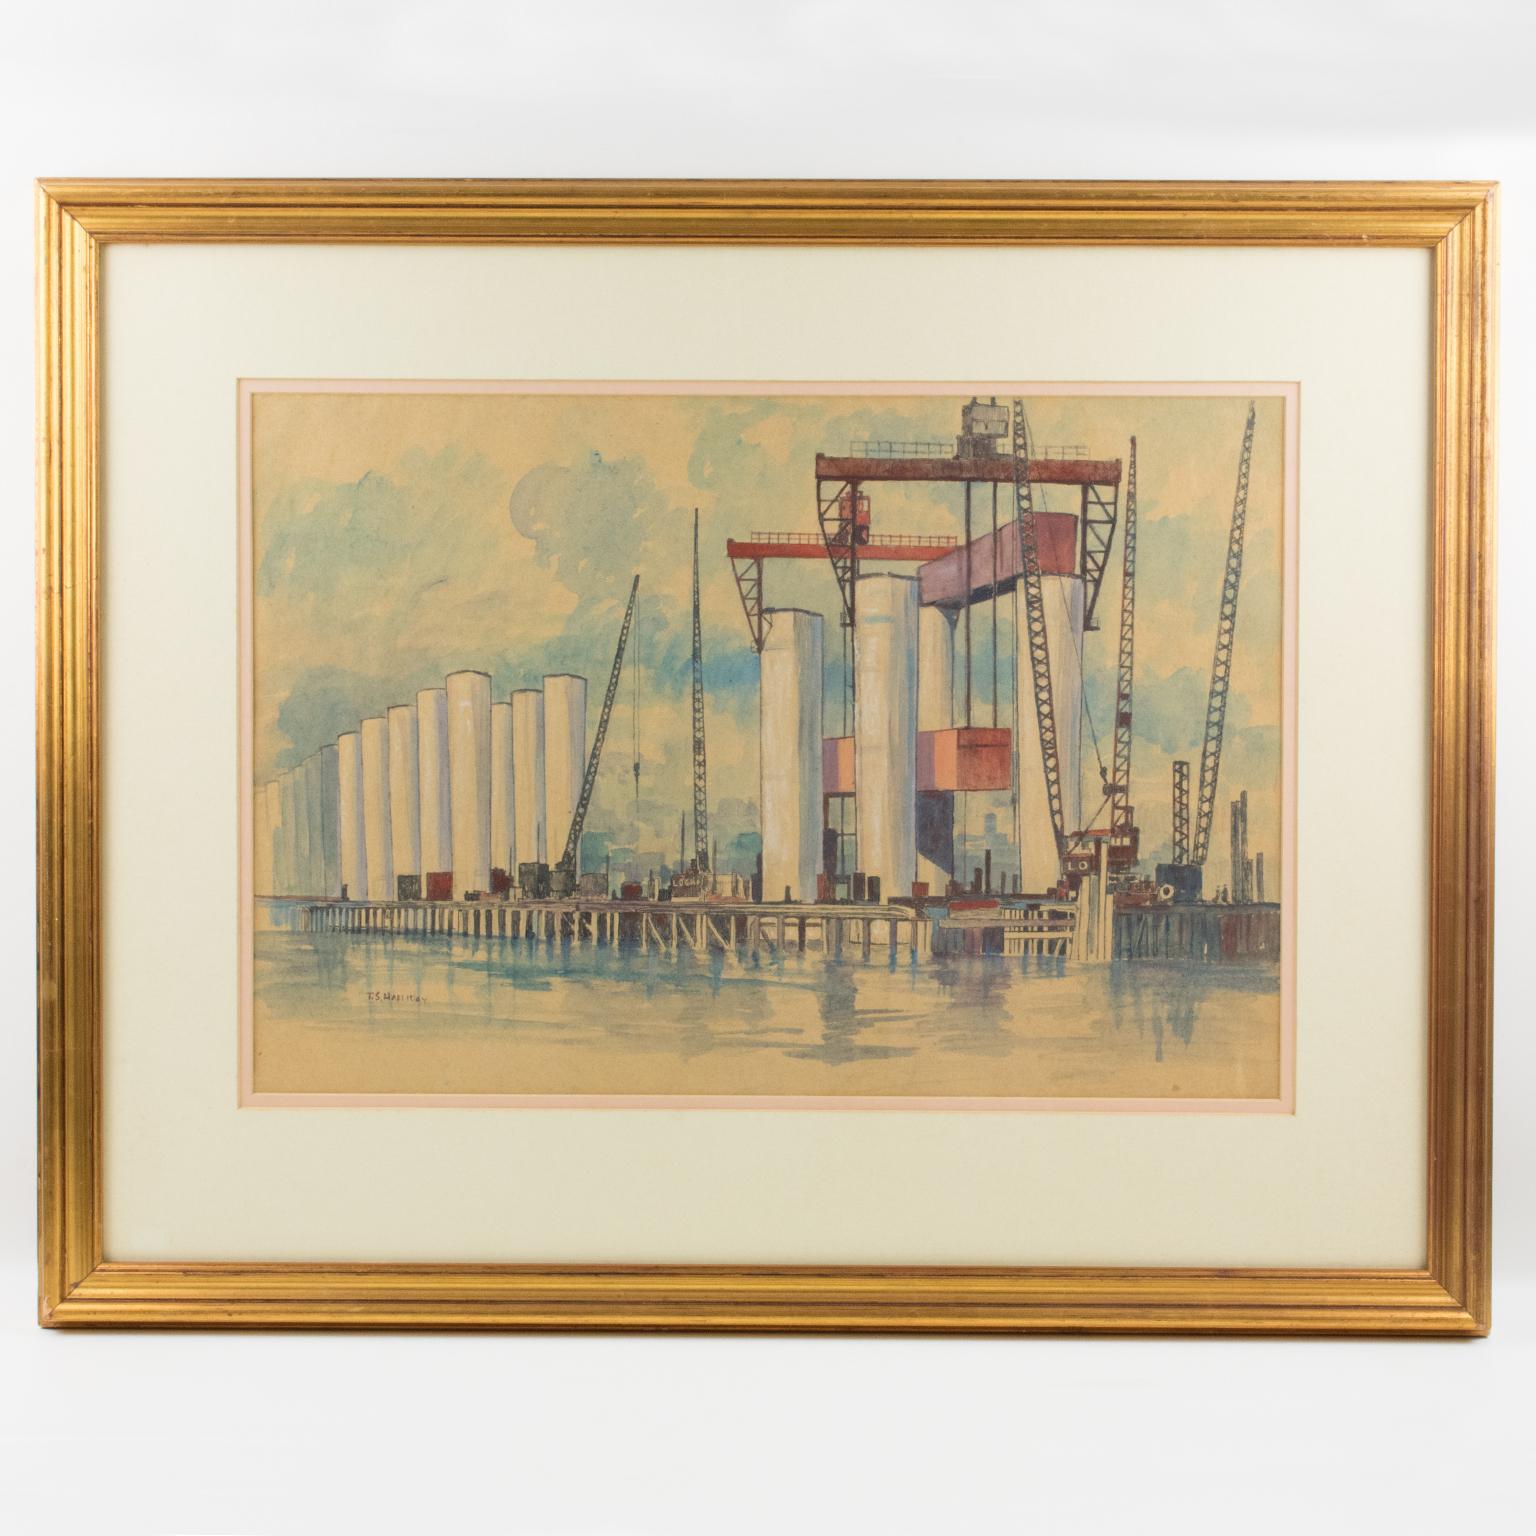 Industrielle Brückenkonstruktion, Meereslandschaft, Pastellgemälde von Thomas S. Halliday – Painting von Thomas Symington Halliday